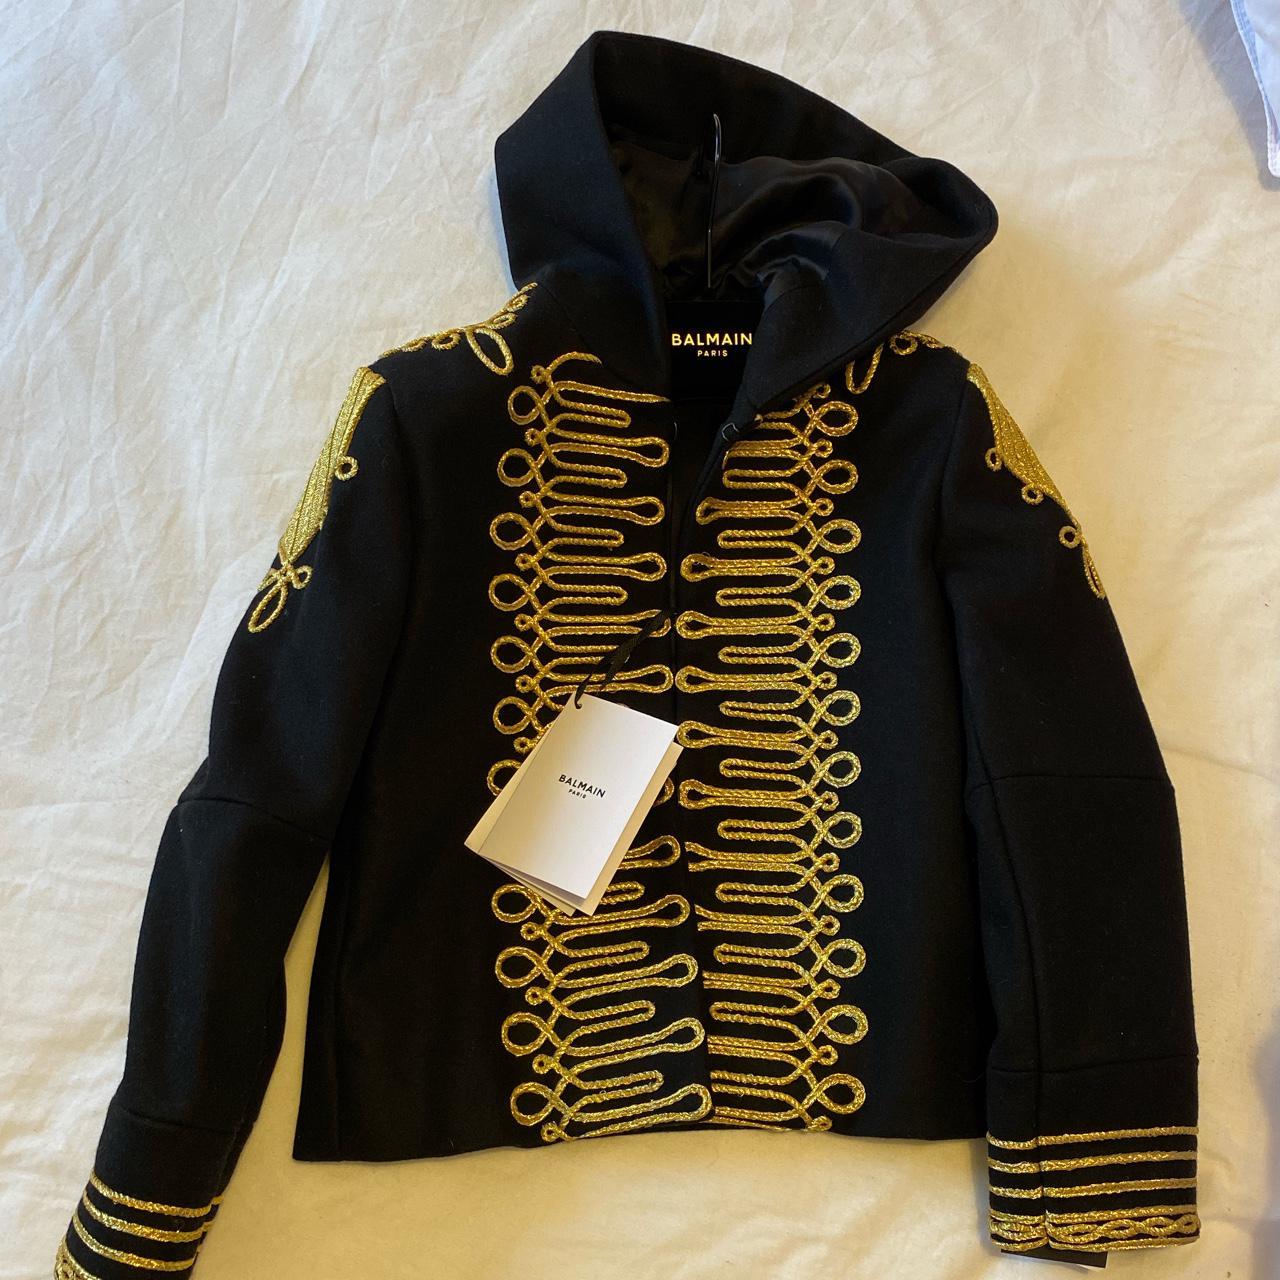 Opdage Agurk Udsøgt Balmain Boys Hooded Military style Jacket with Gold... - Depop